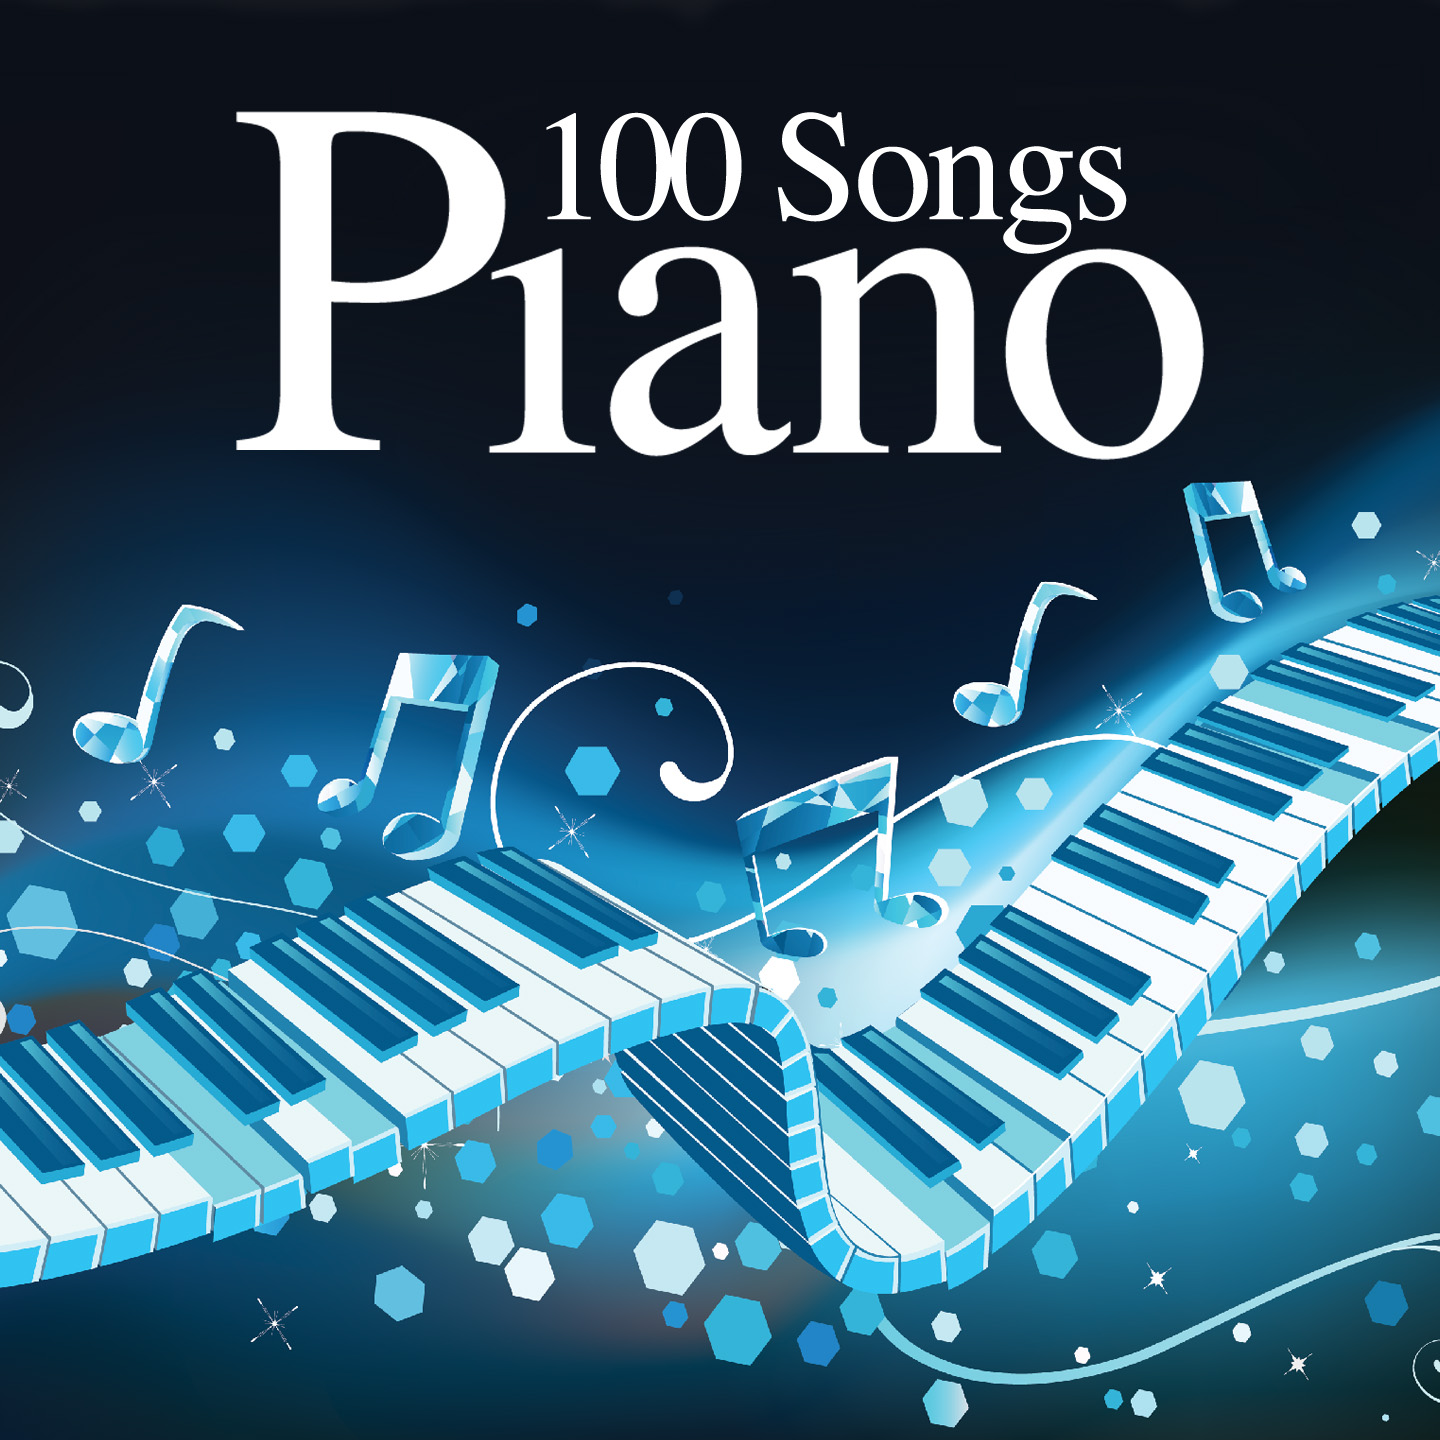 100 Songs Piano